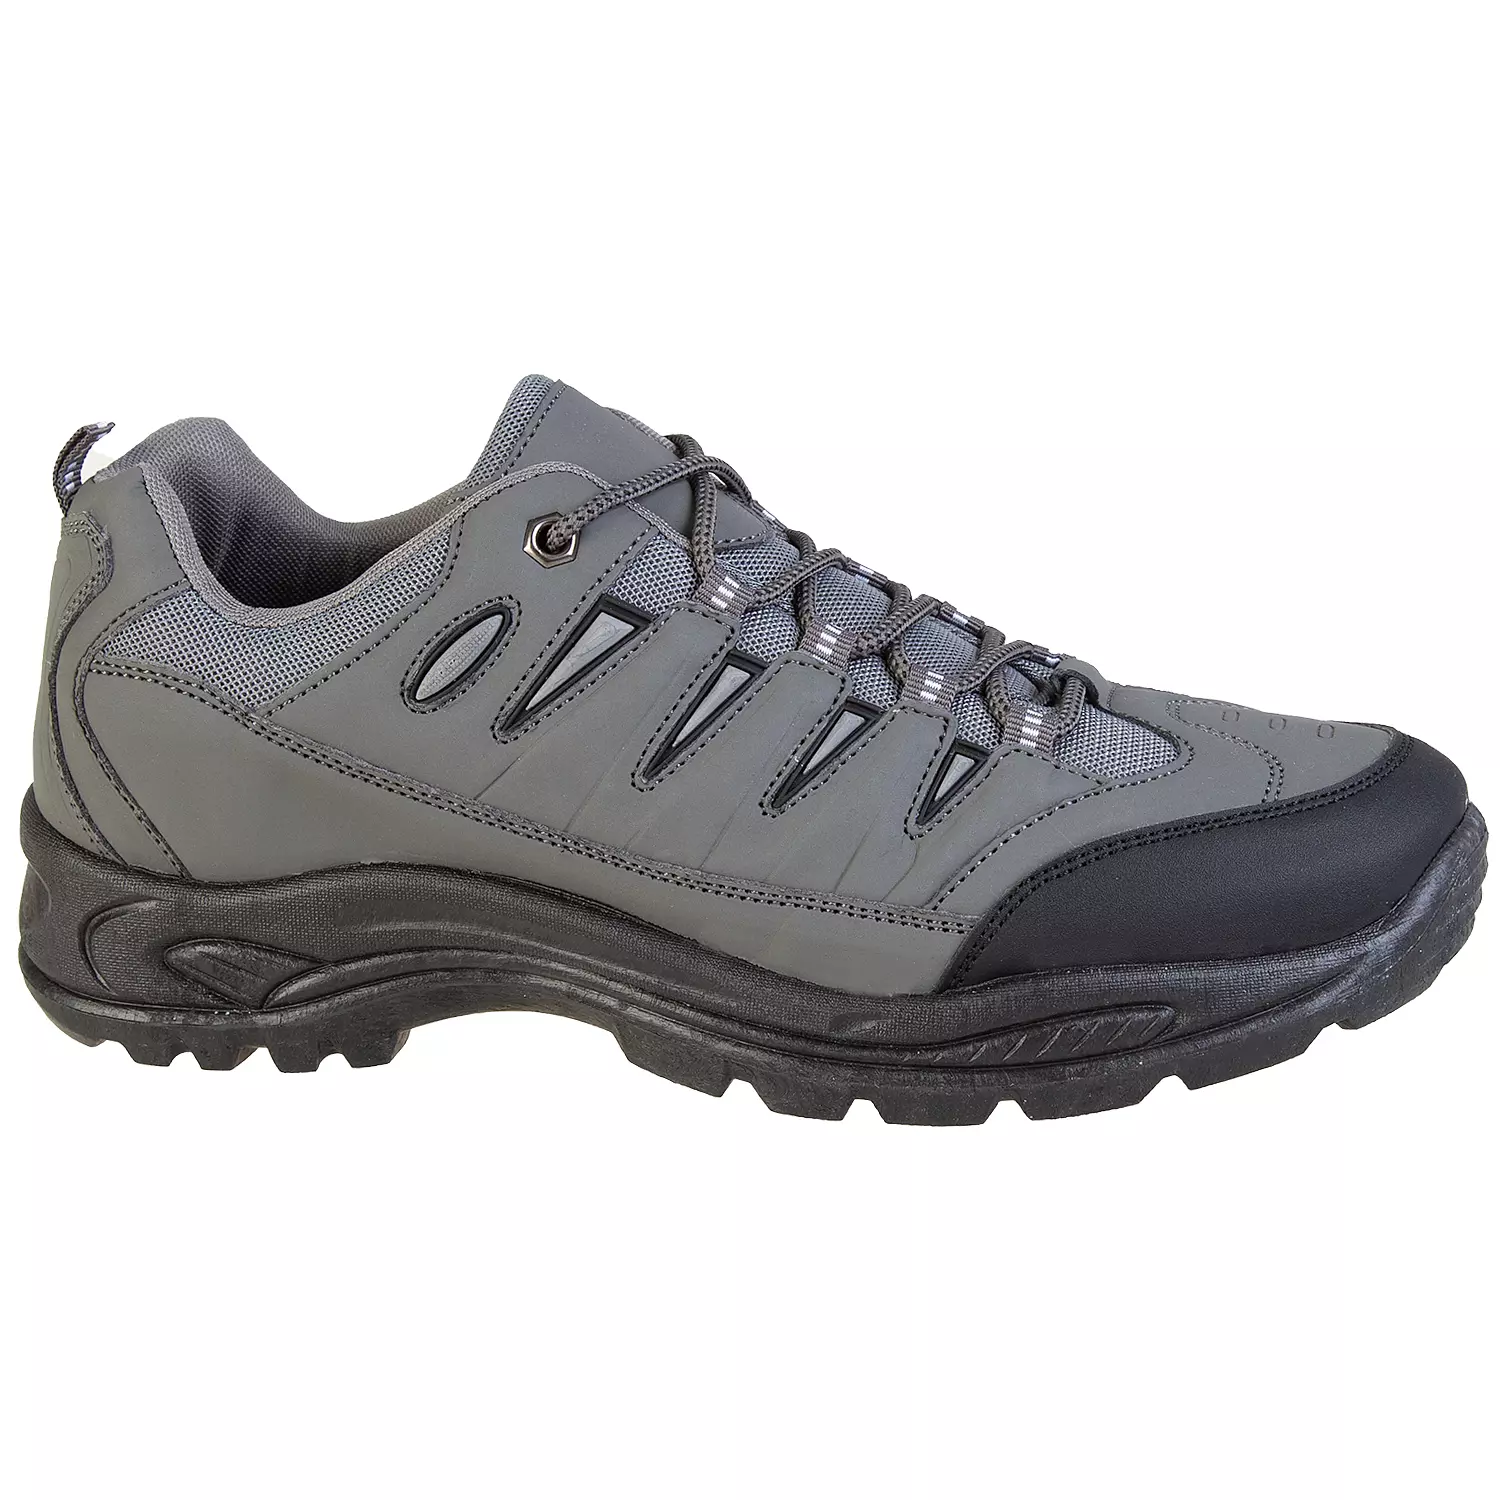 Men's low top waterproof trekking and hiking shoes, size 10